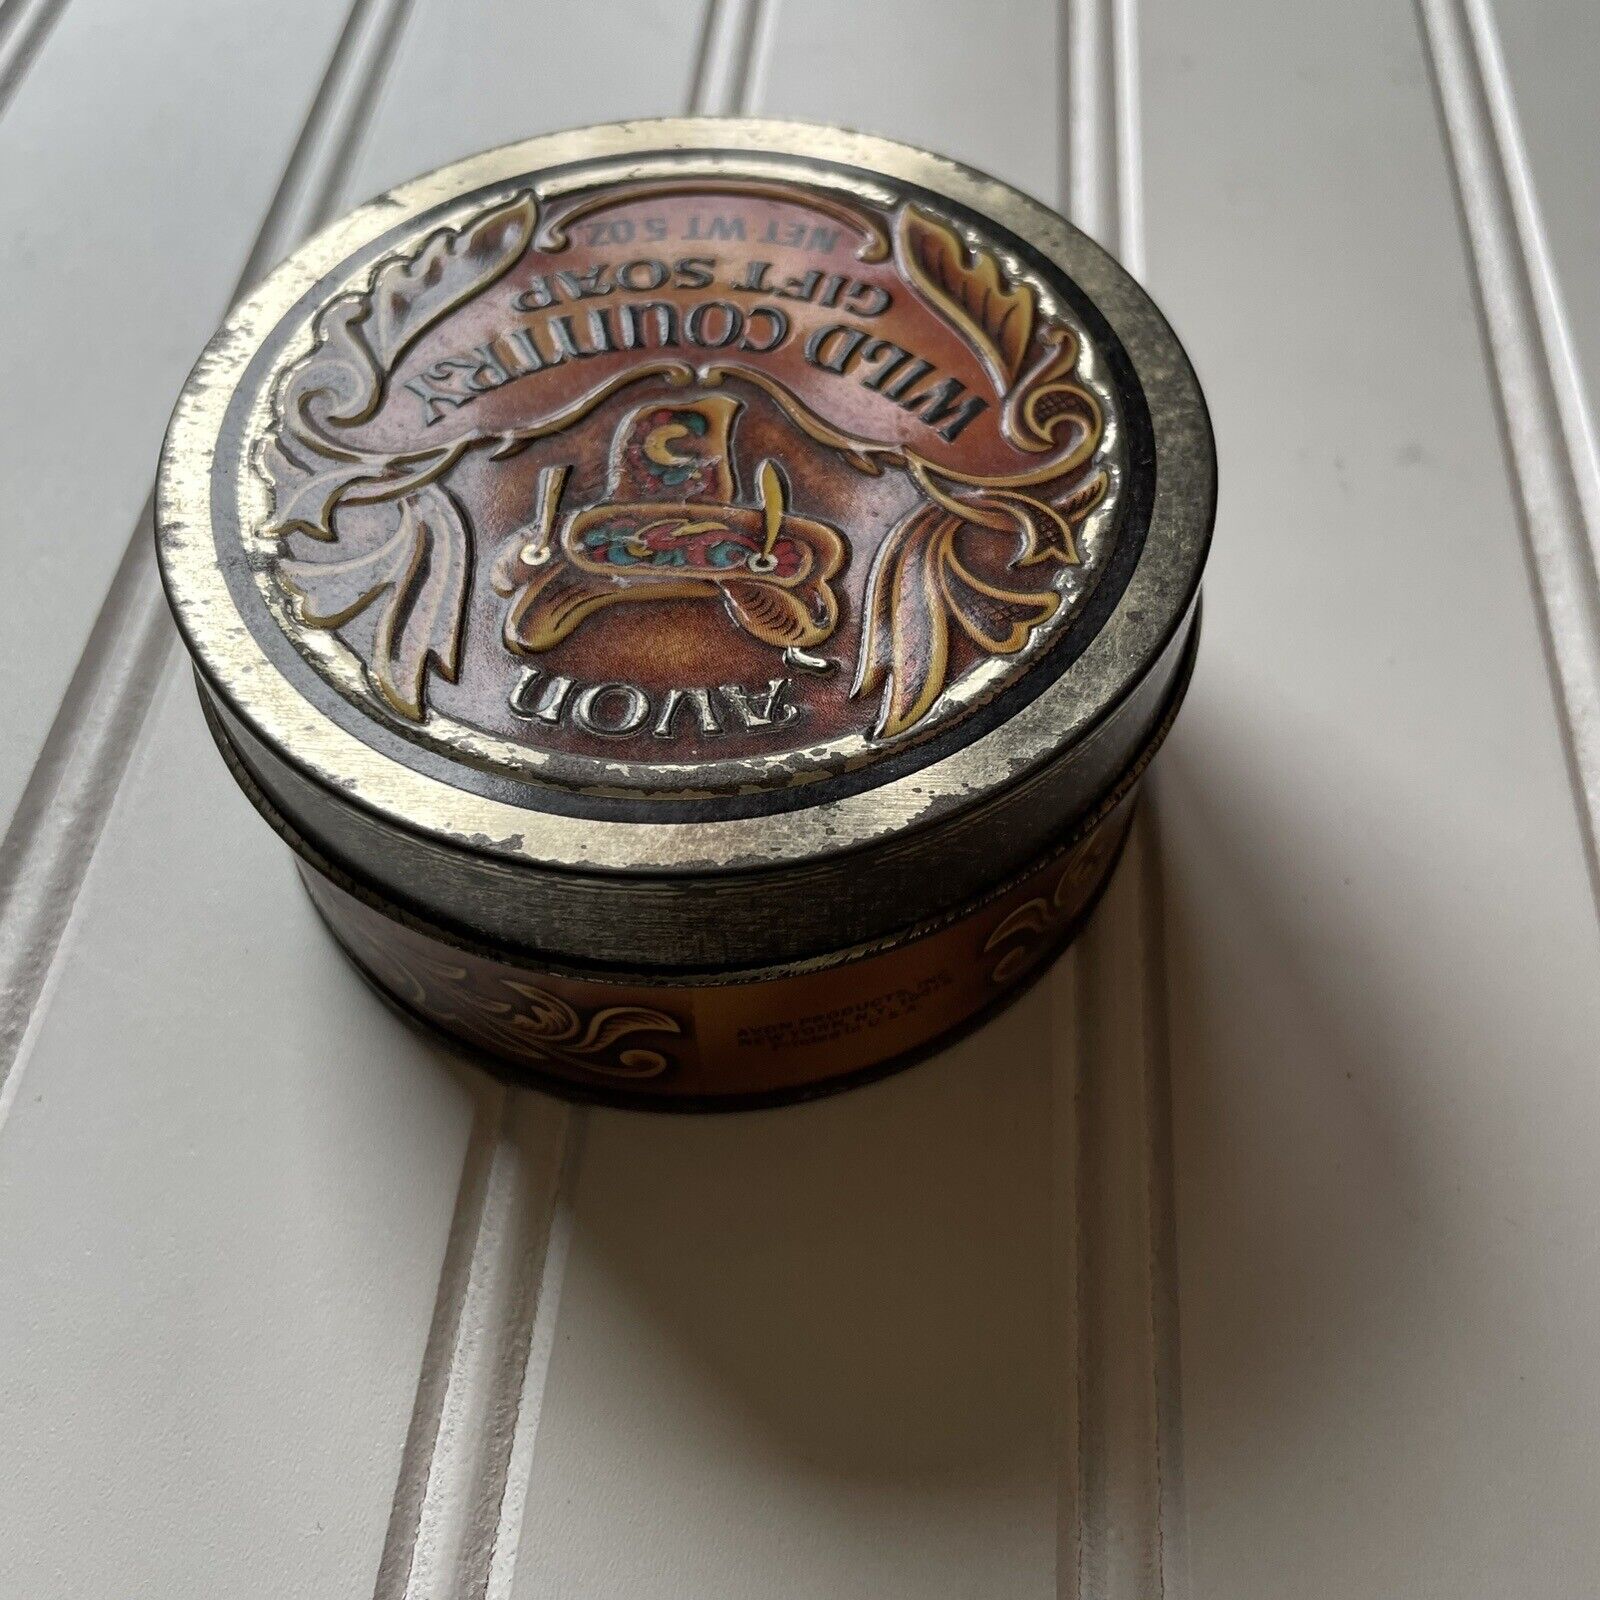 Vintage Avon Wild Country Gift Soap Trinket Tin Box Fragrance Man Cave Decor Без бренда - фотография #5